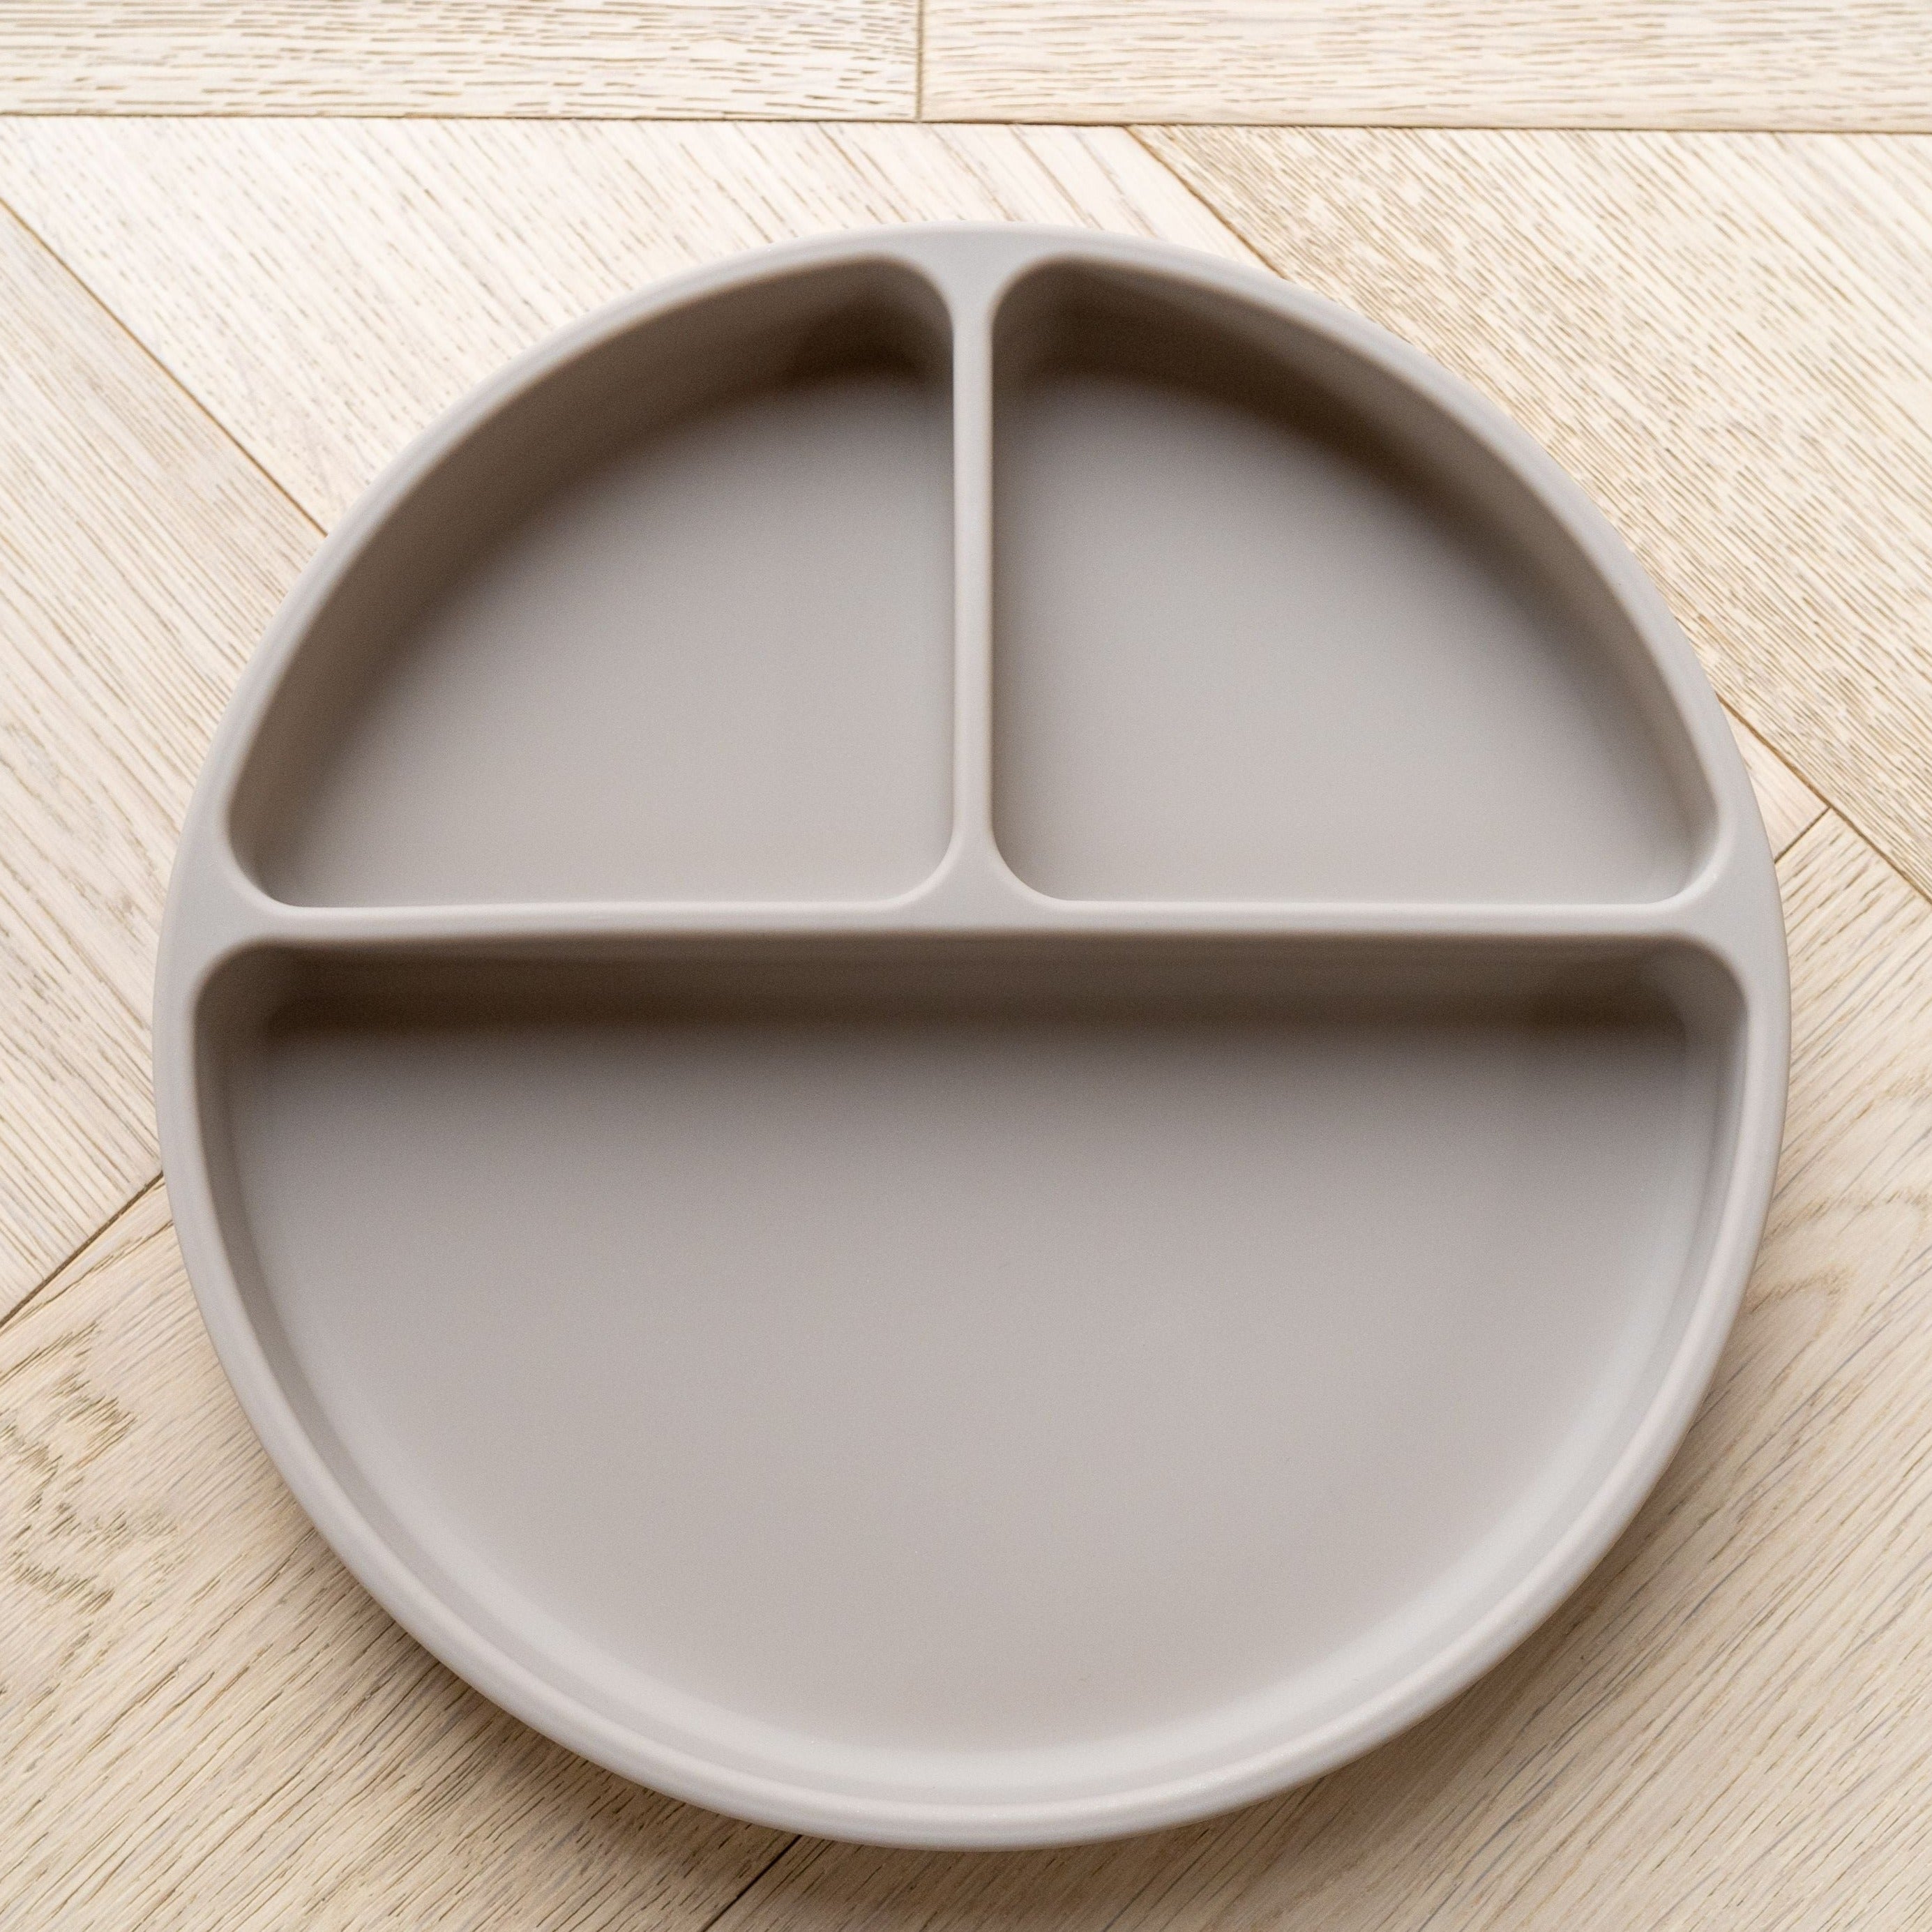 Mabel & Fox - Silicone Tableware - Plate - Sandstone